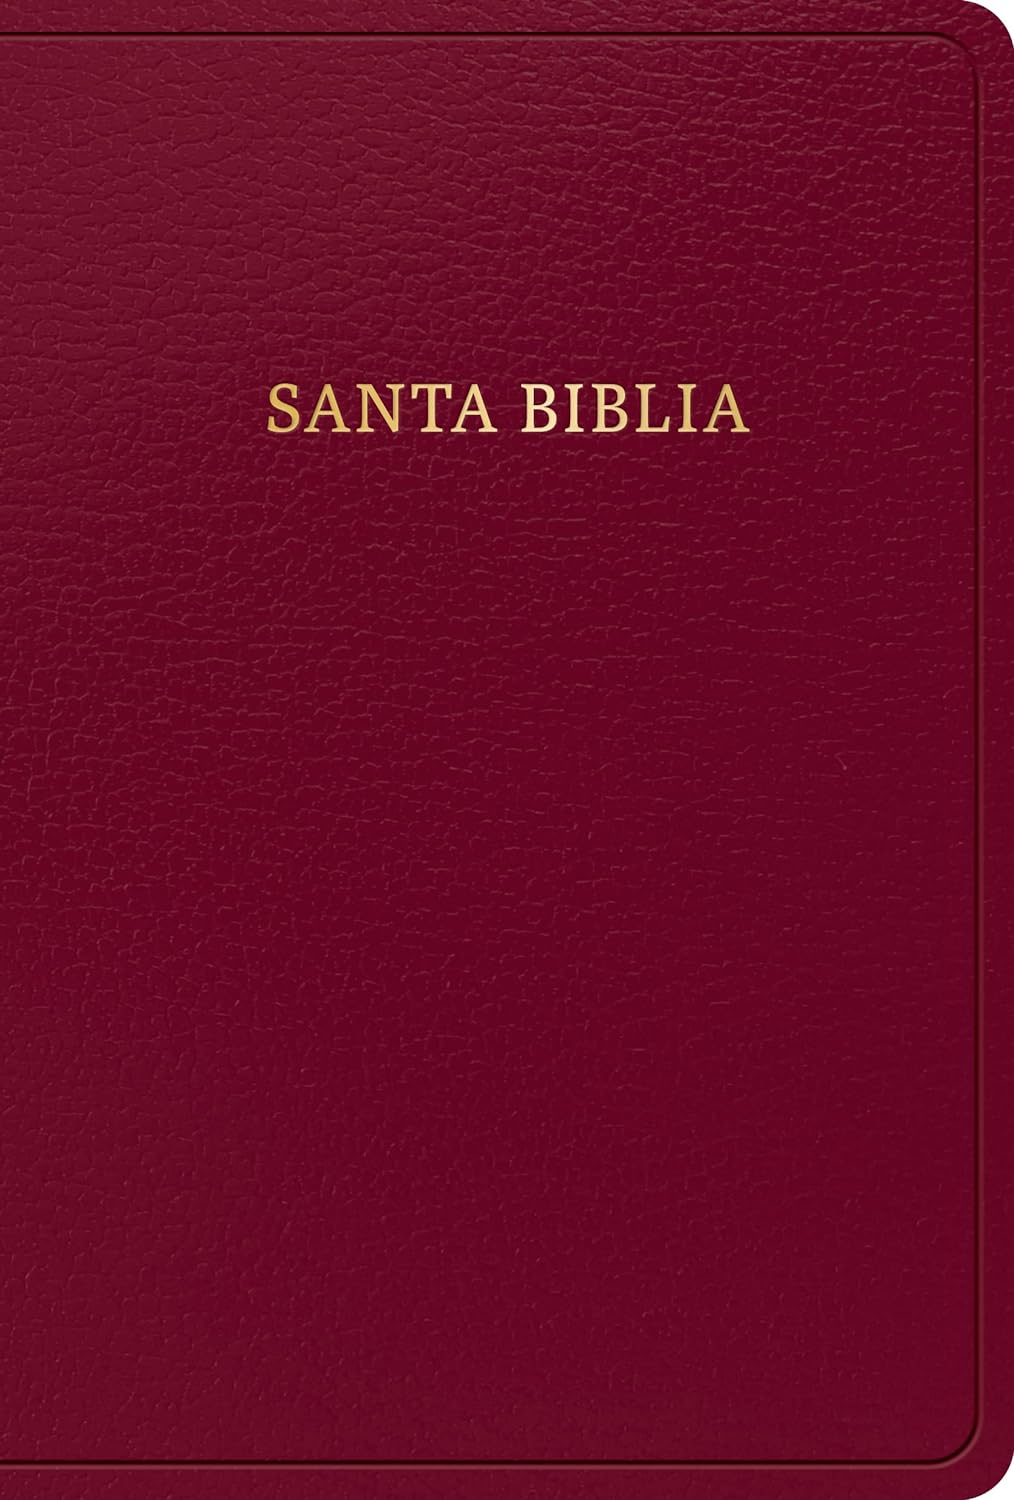 RVR 1960 Biblia letra grande tamaño manual, borgoña, imitación piel